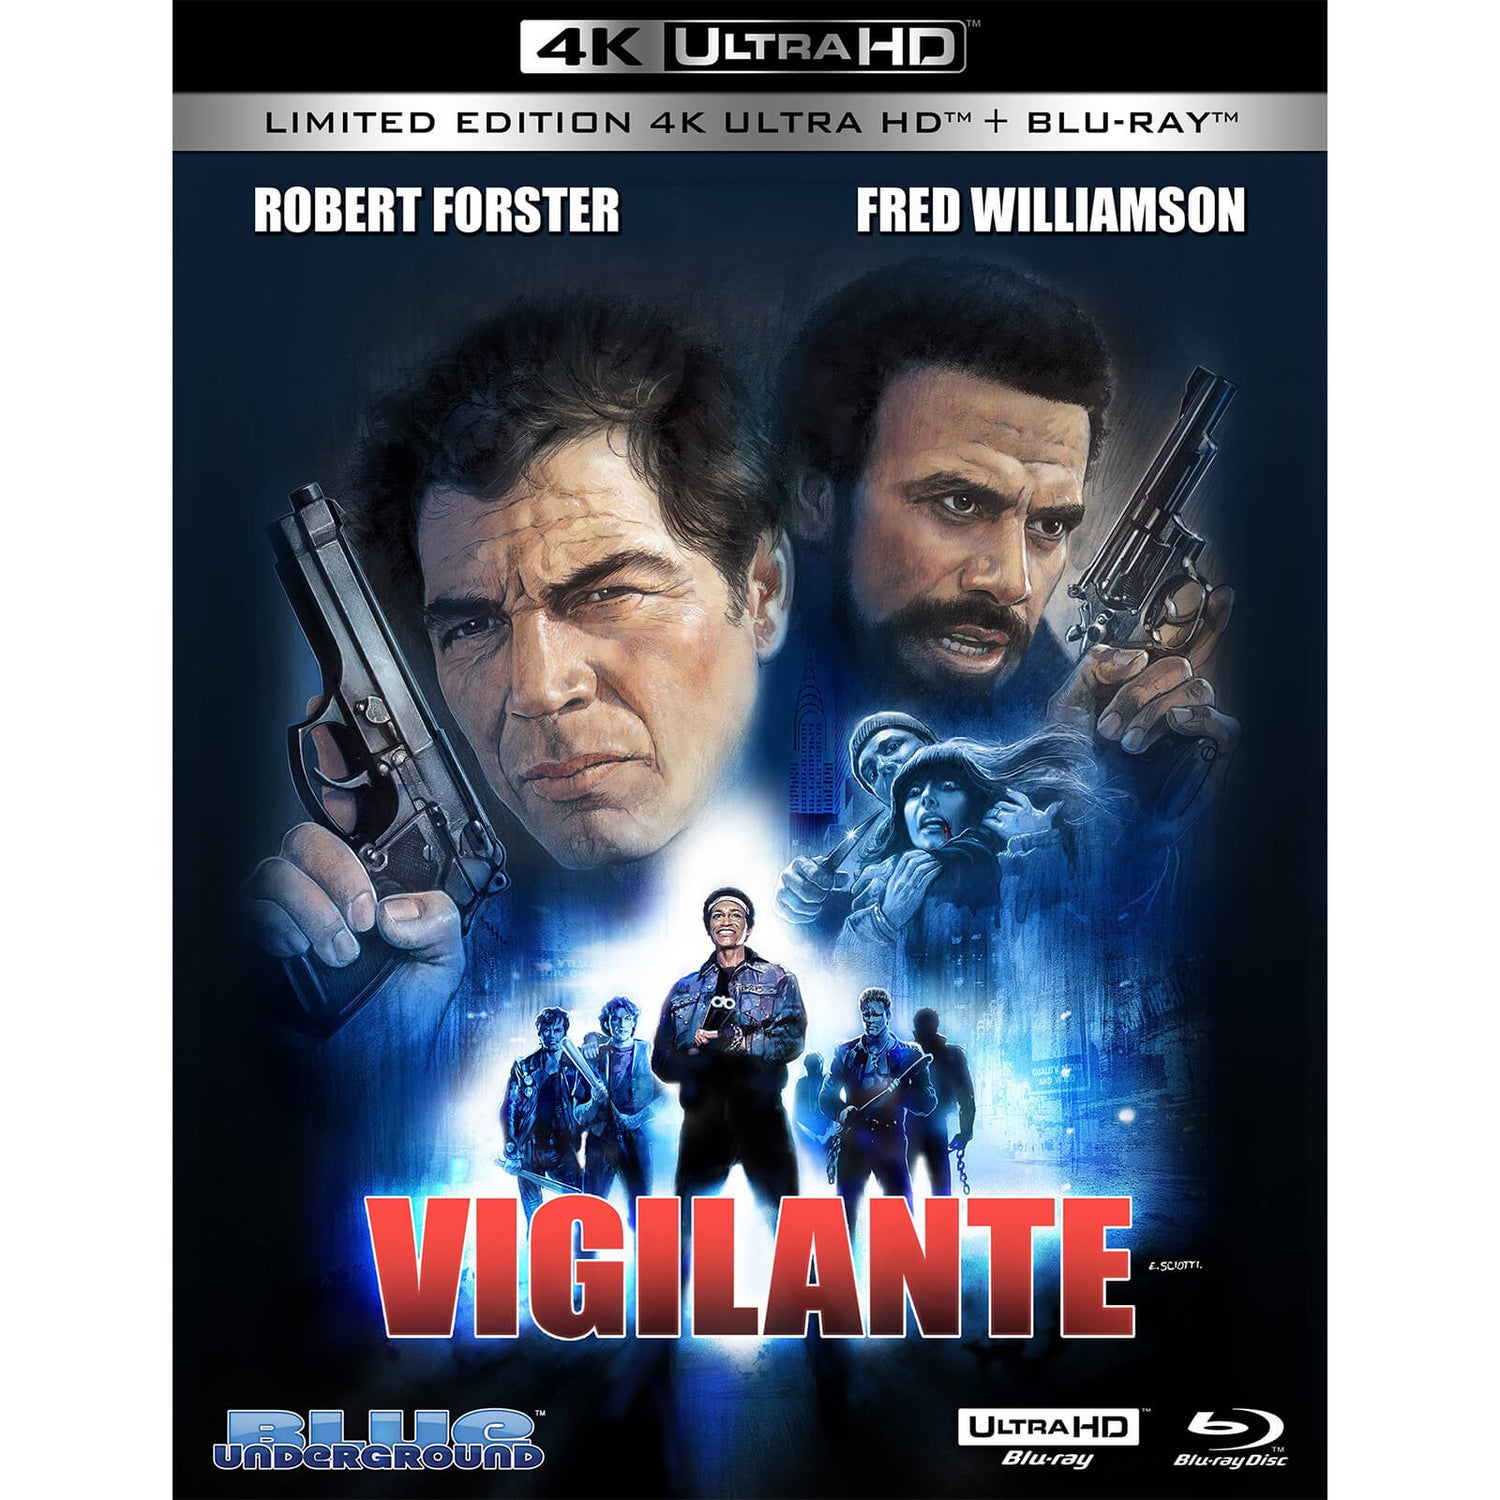 Vigilante - Limited Edition 4K Ultra HD (Includes Blu-ray)